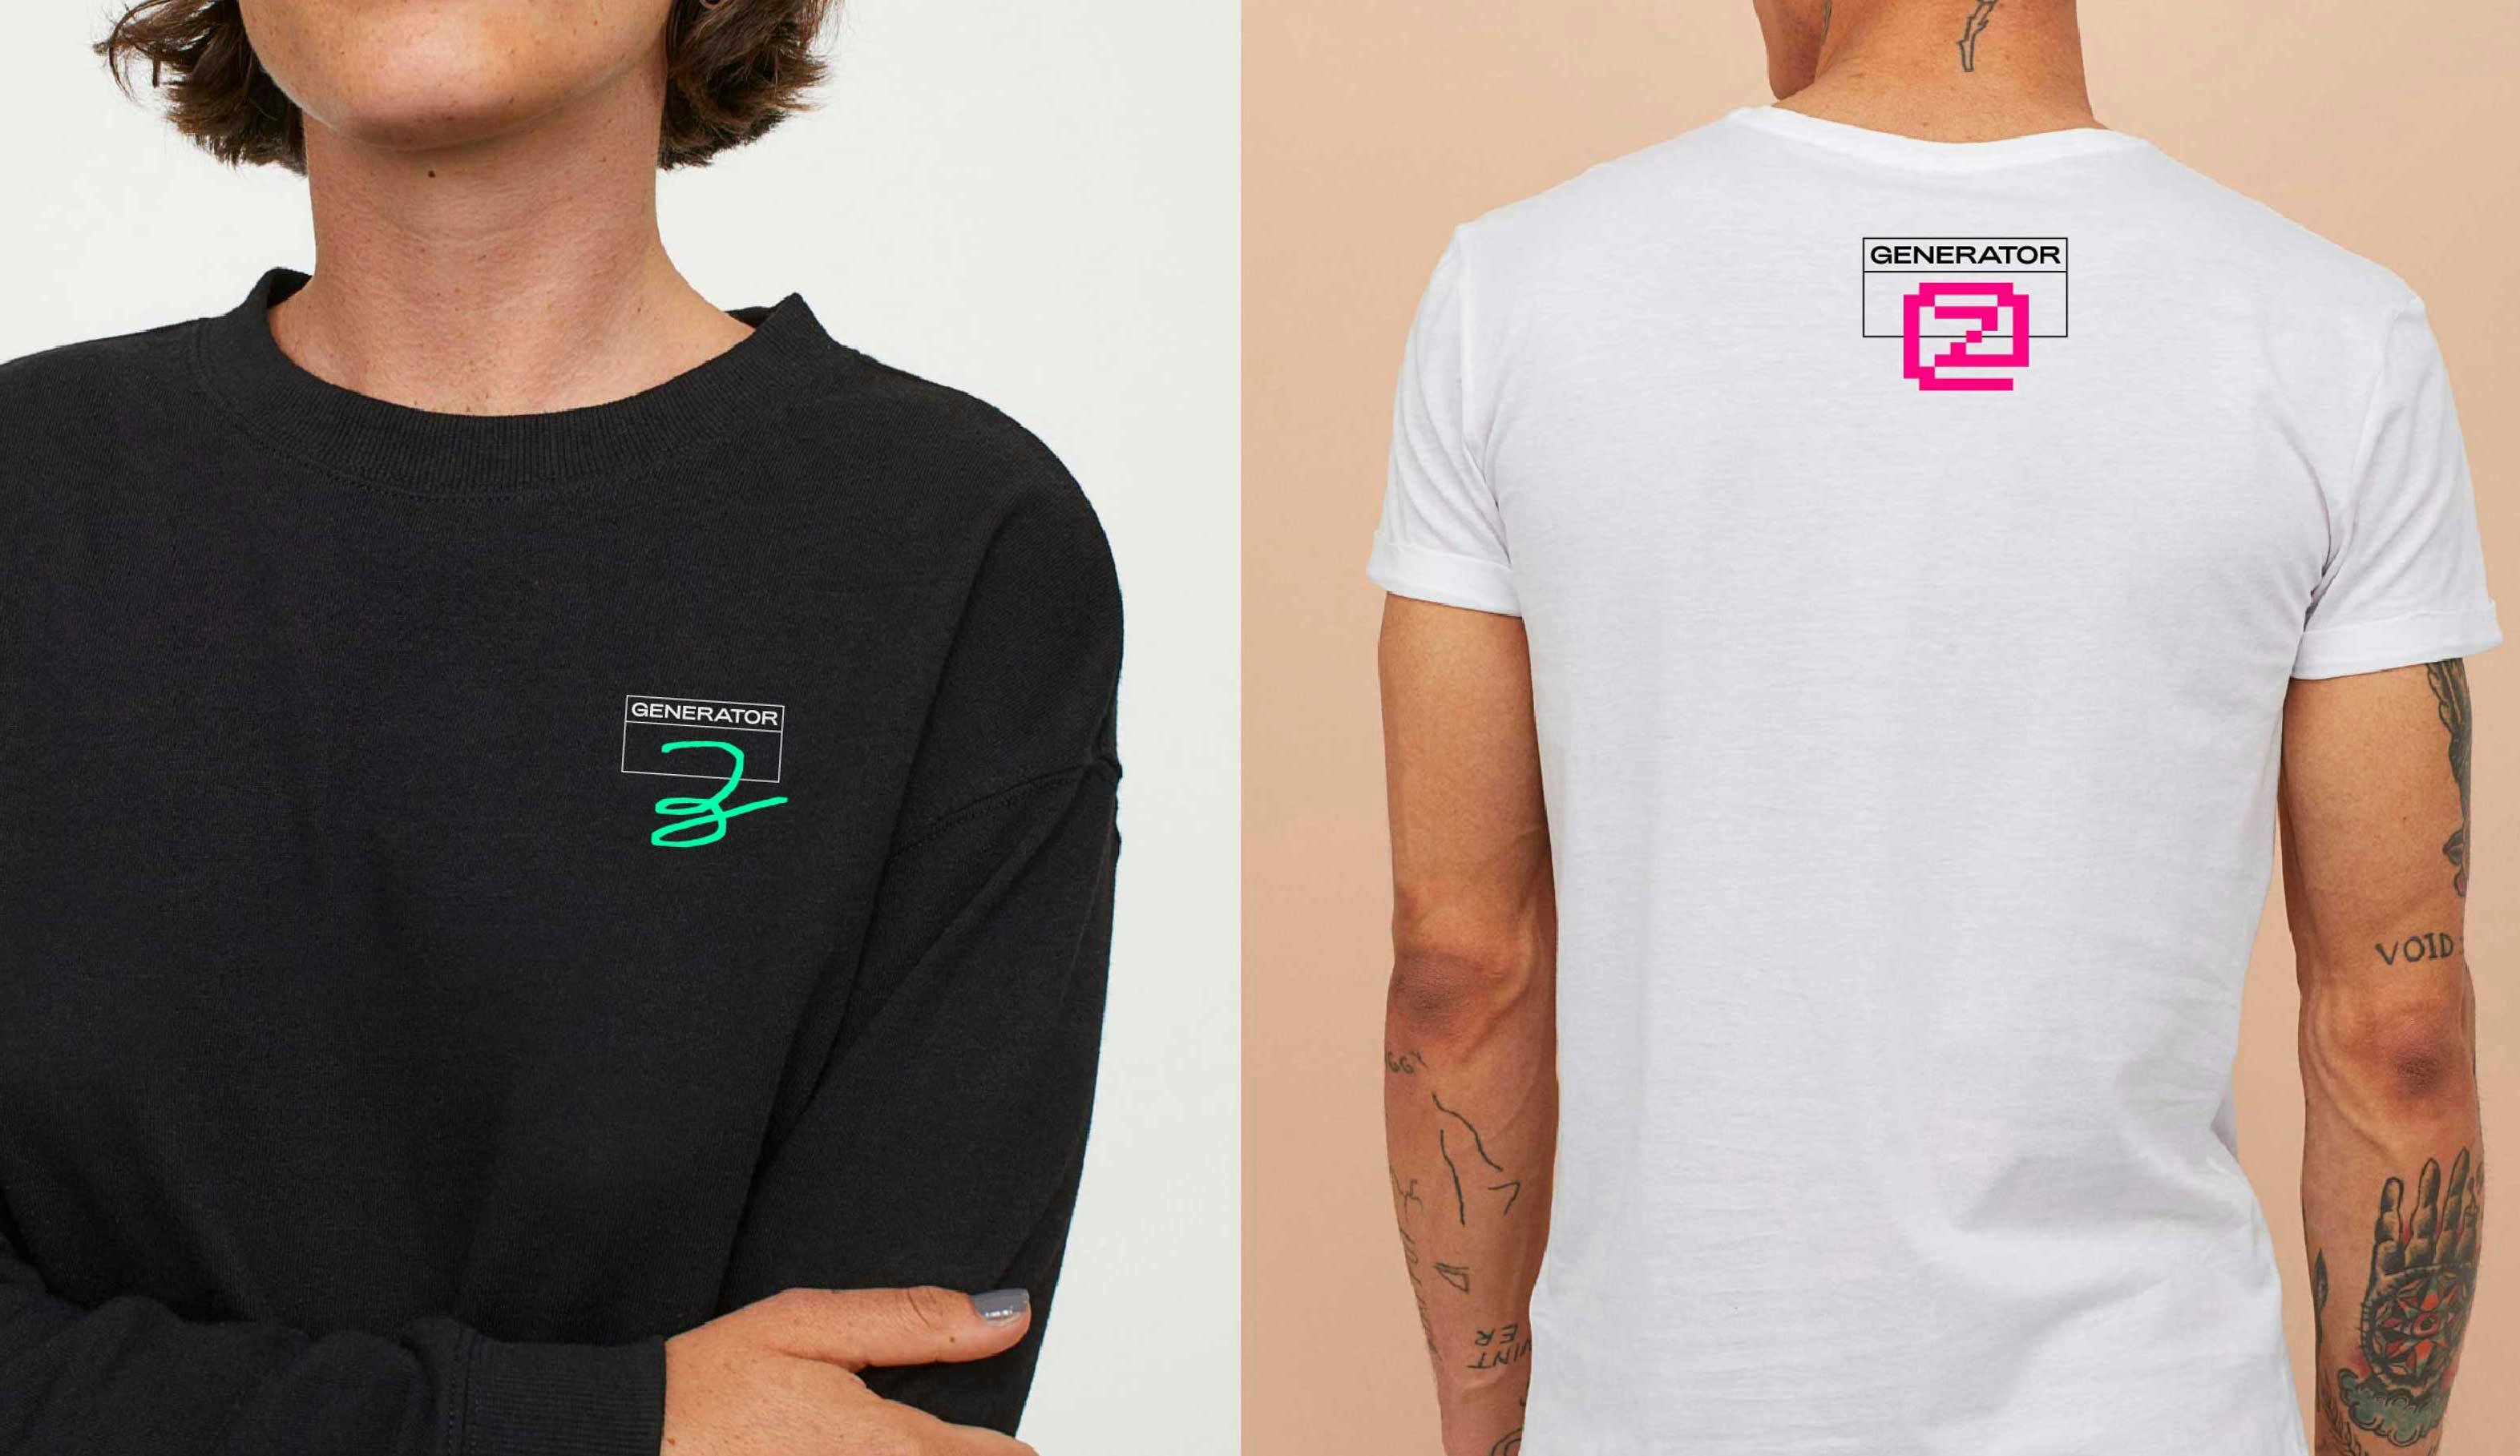 man-and-woman-wearing-tshirts-with-generator-z-logos.jpg